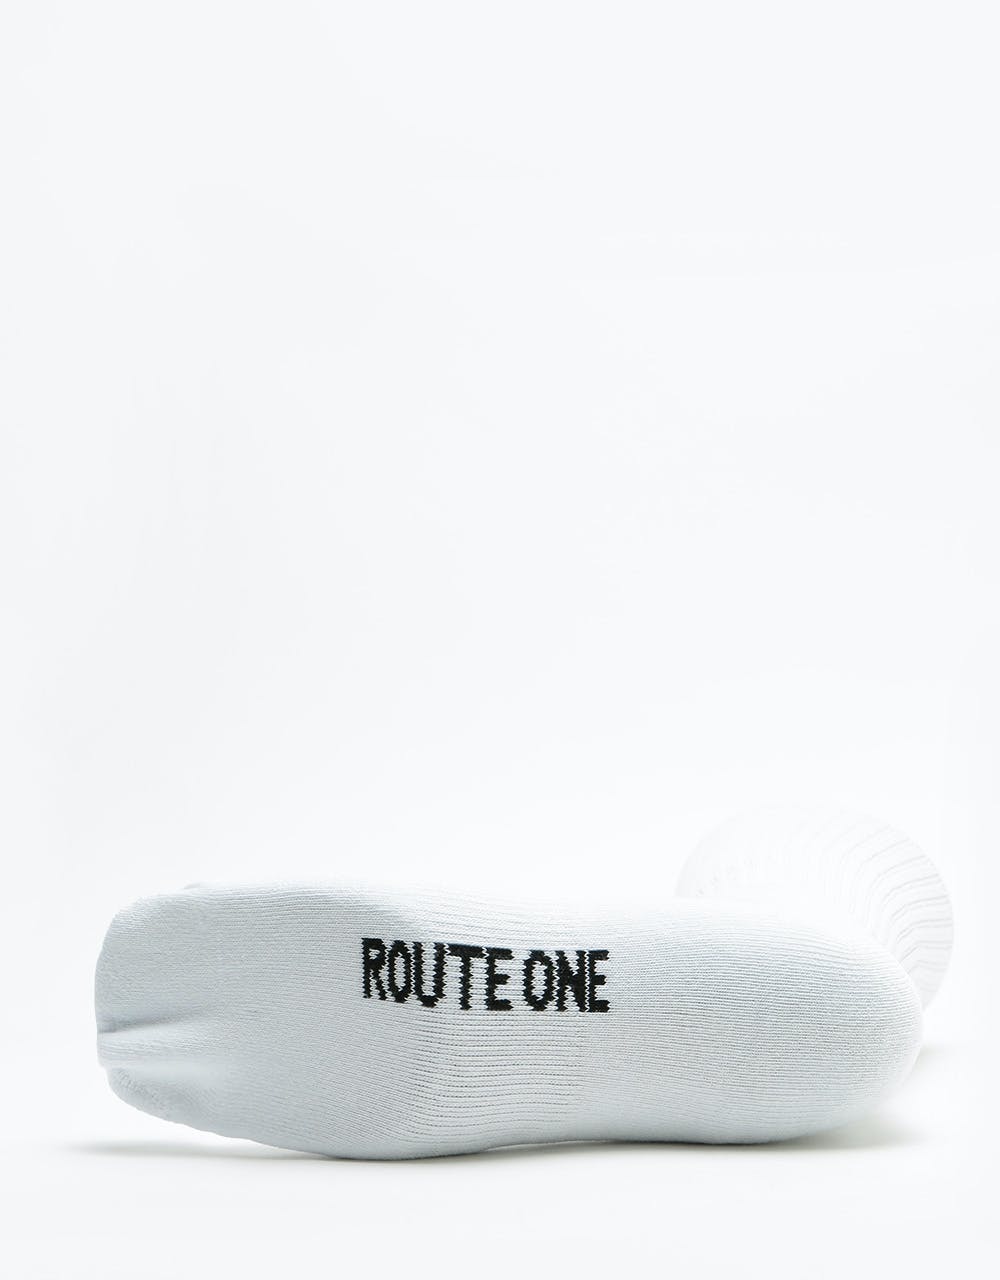 Route One Cig Socks - White